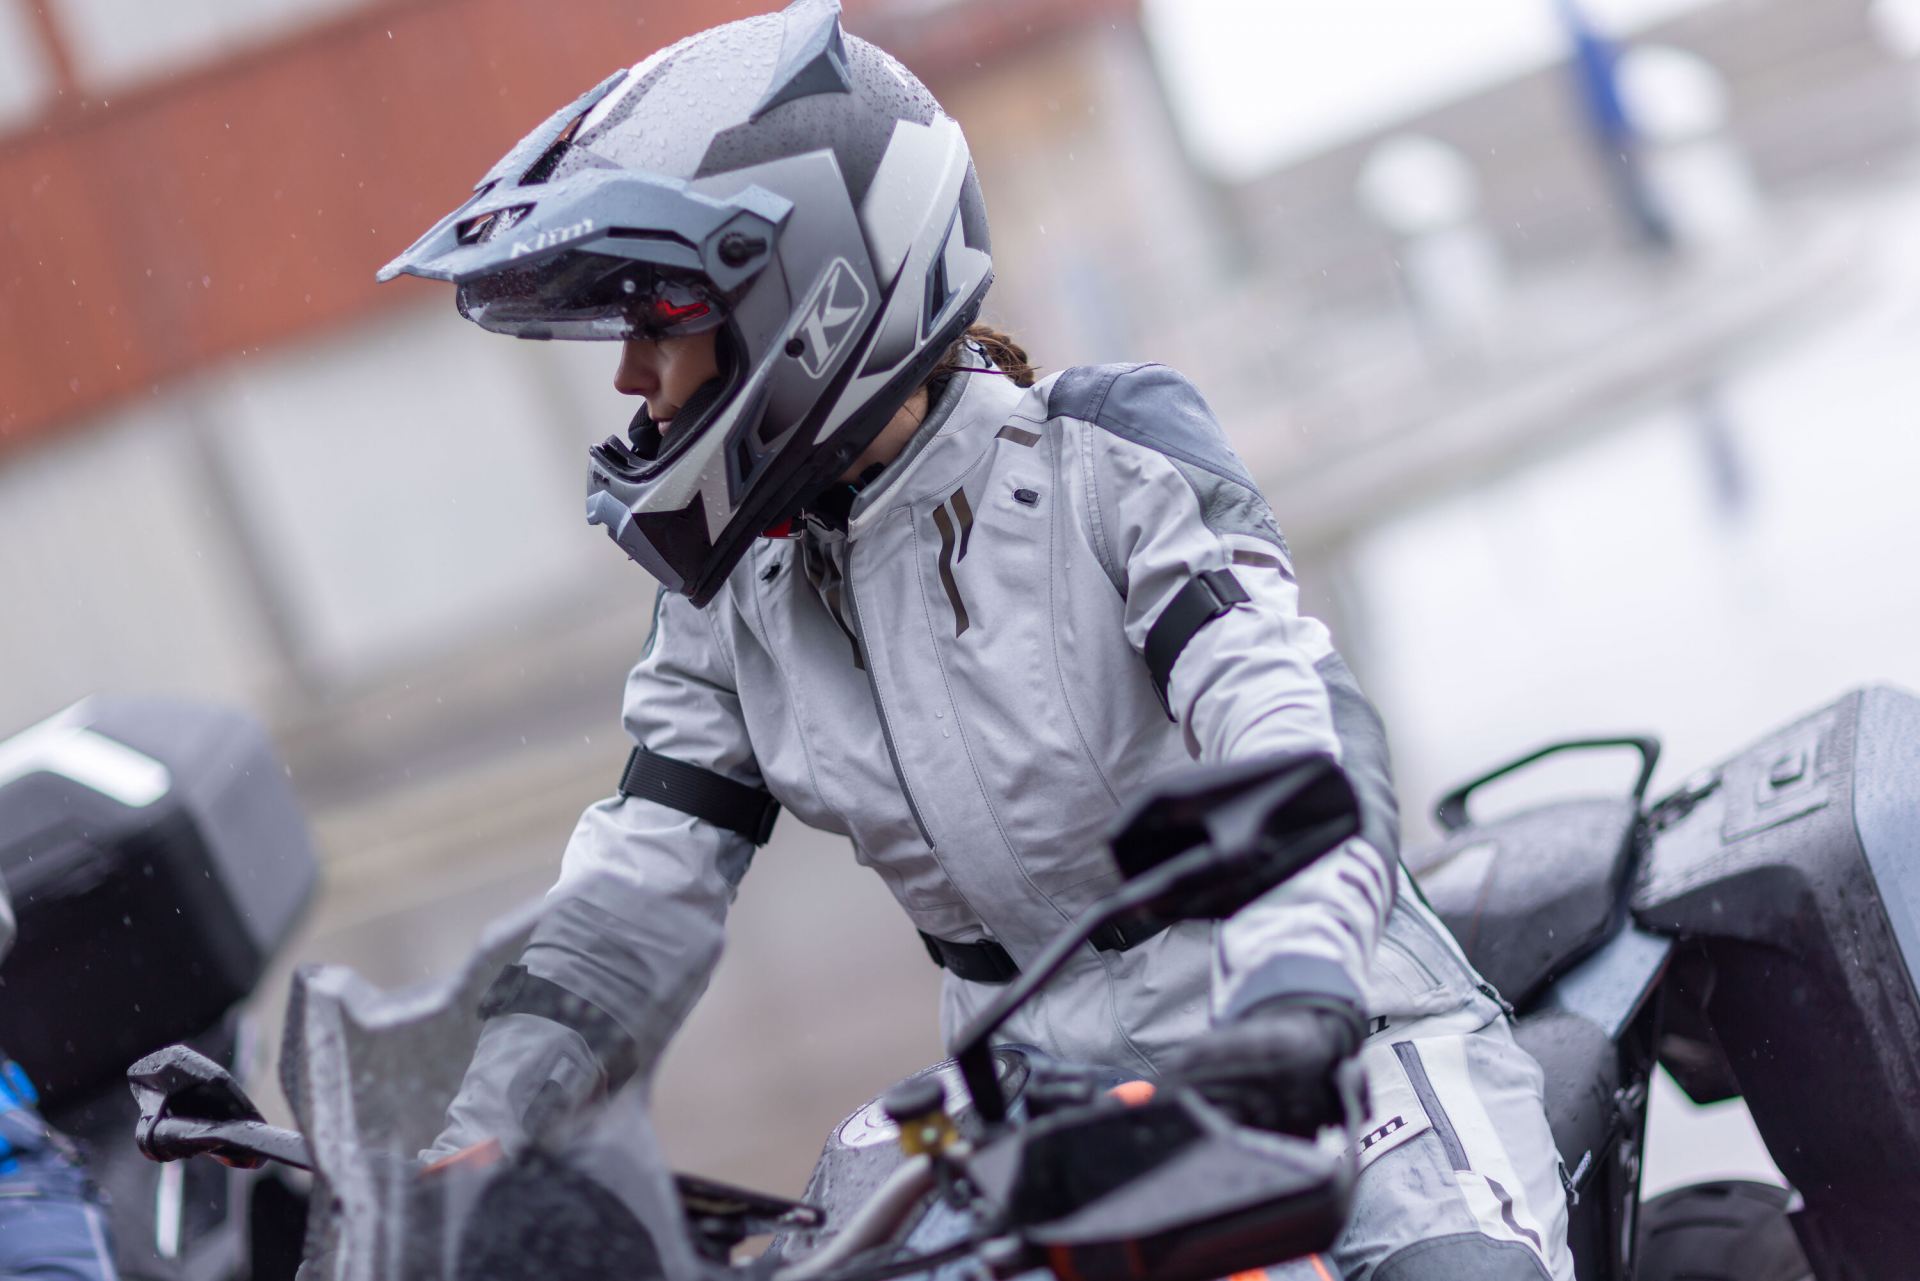 KLIM Motorradbekleidung: By Women for Women | Motorradreporter